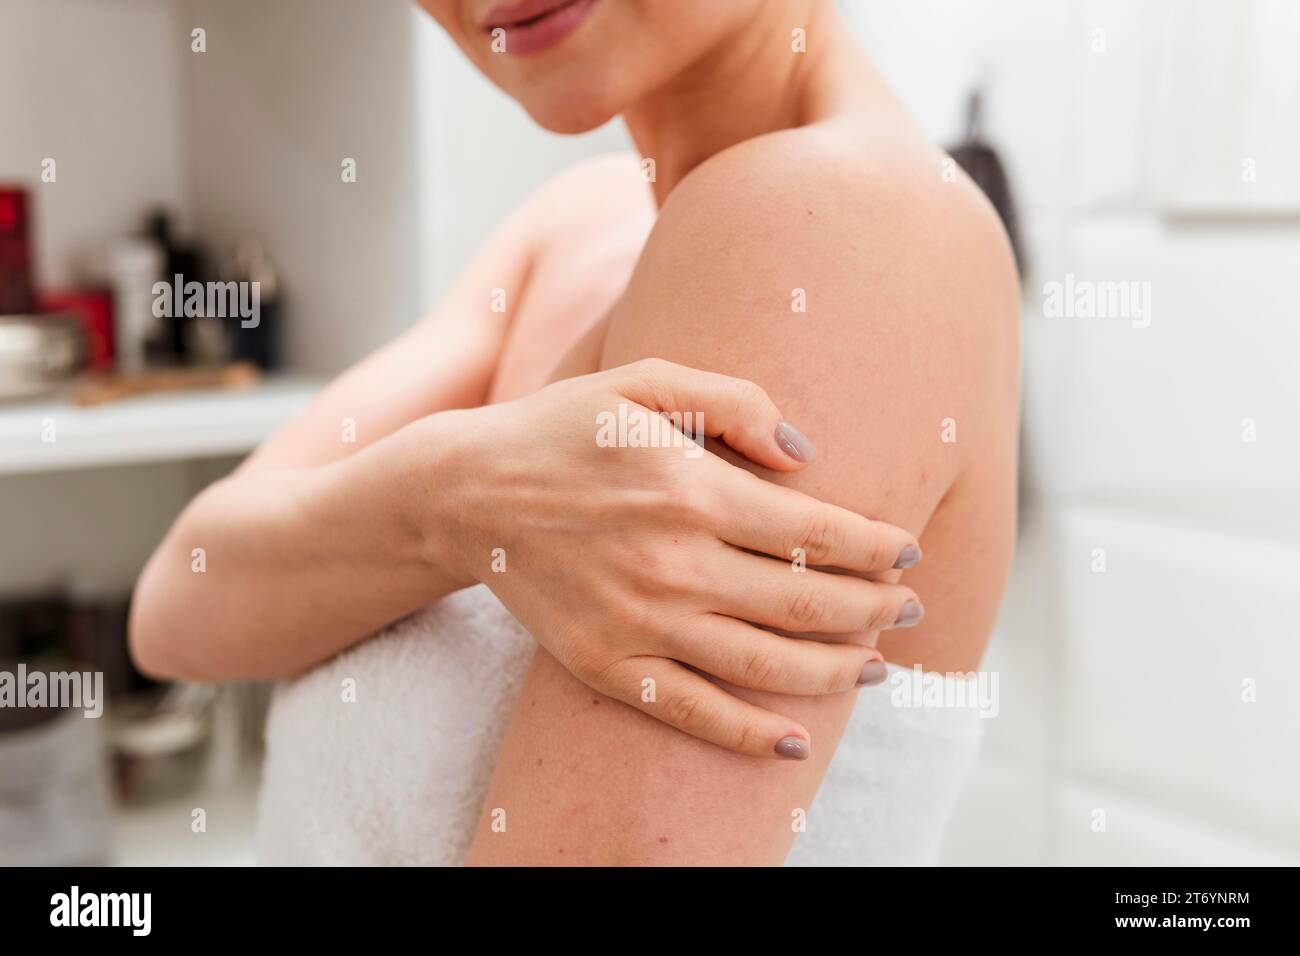 Woman holding her arm bathroom Stock Photo